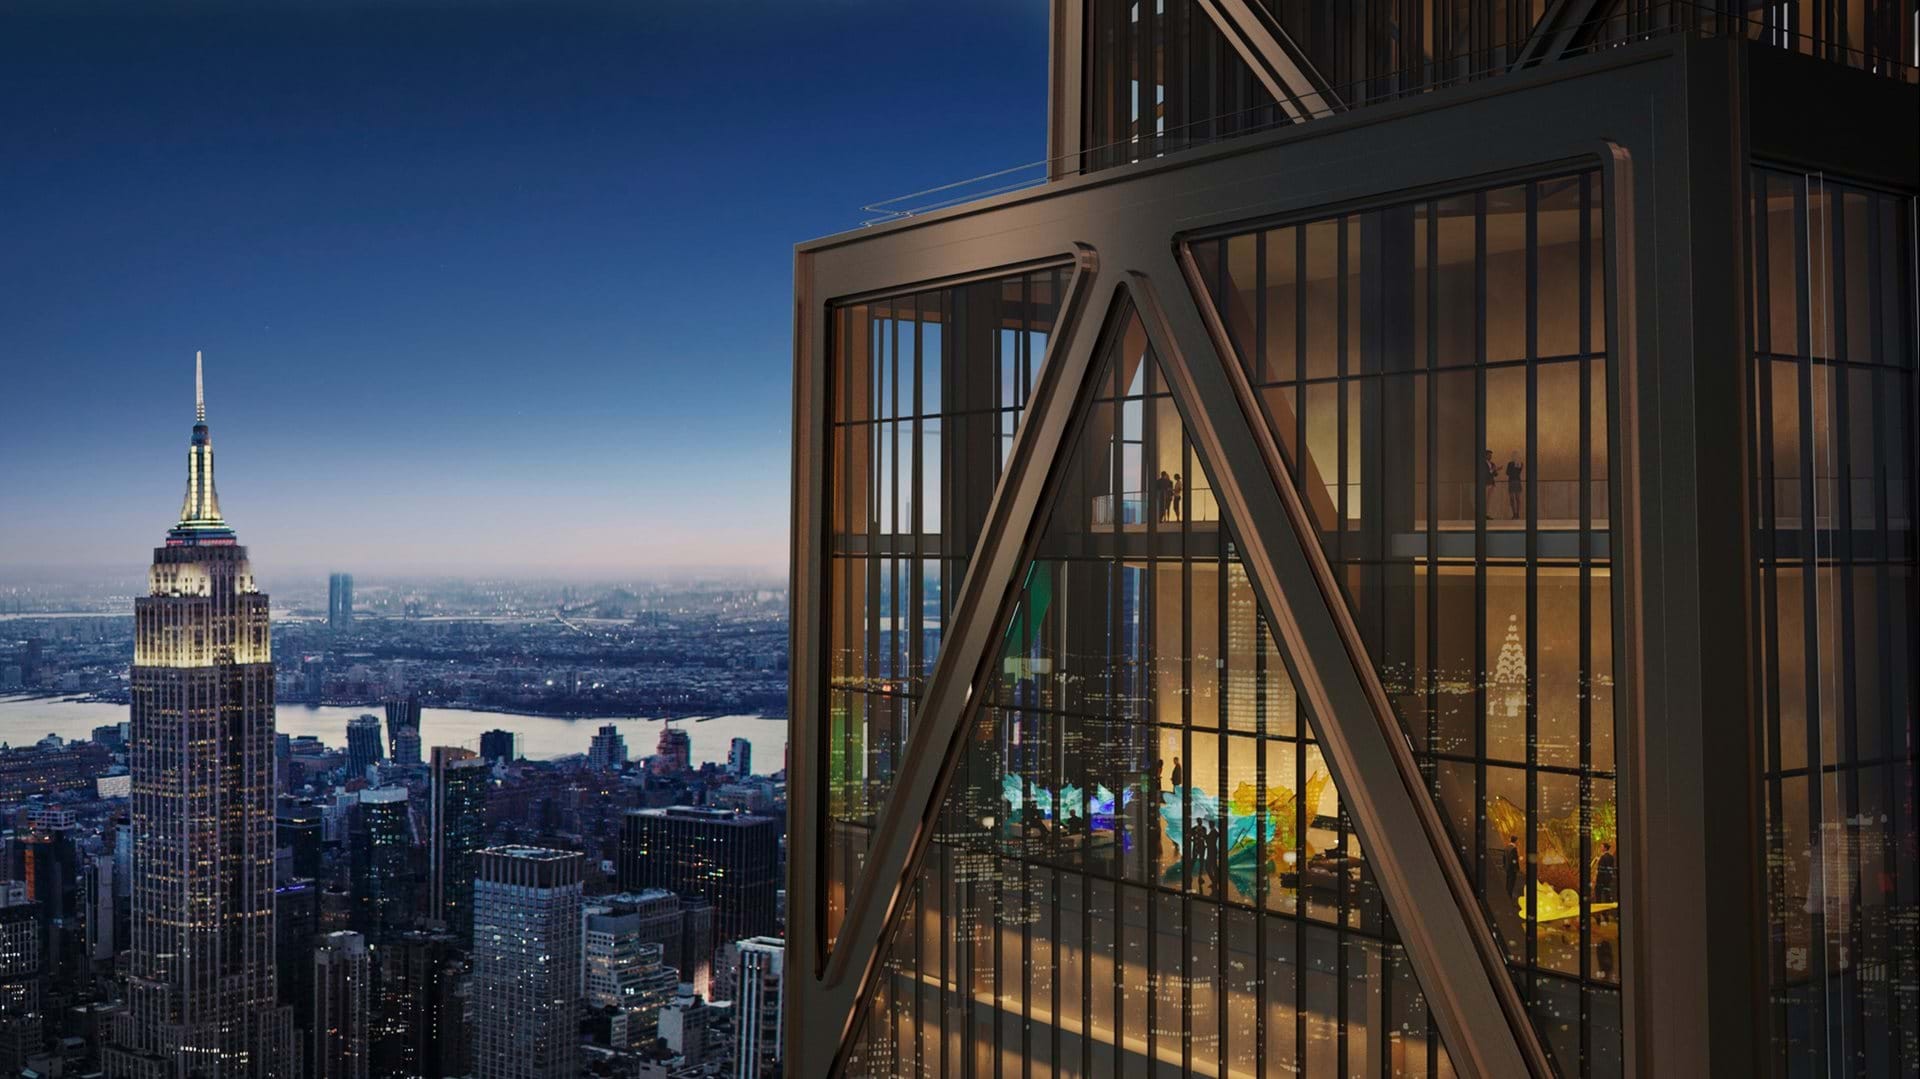 View of the 270 Park skyscraper in New York